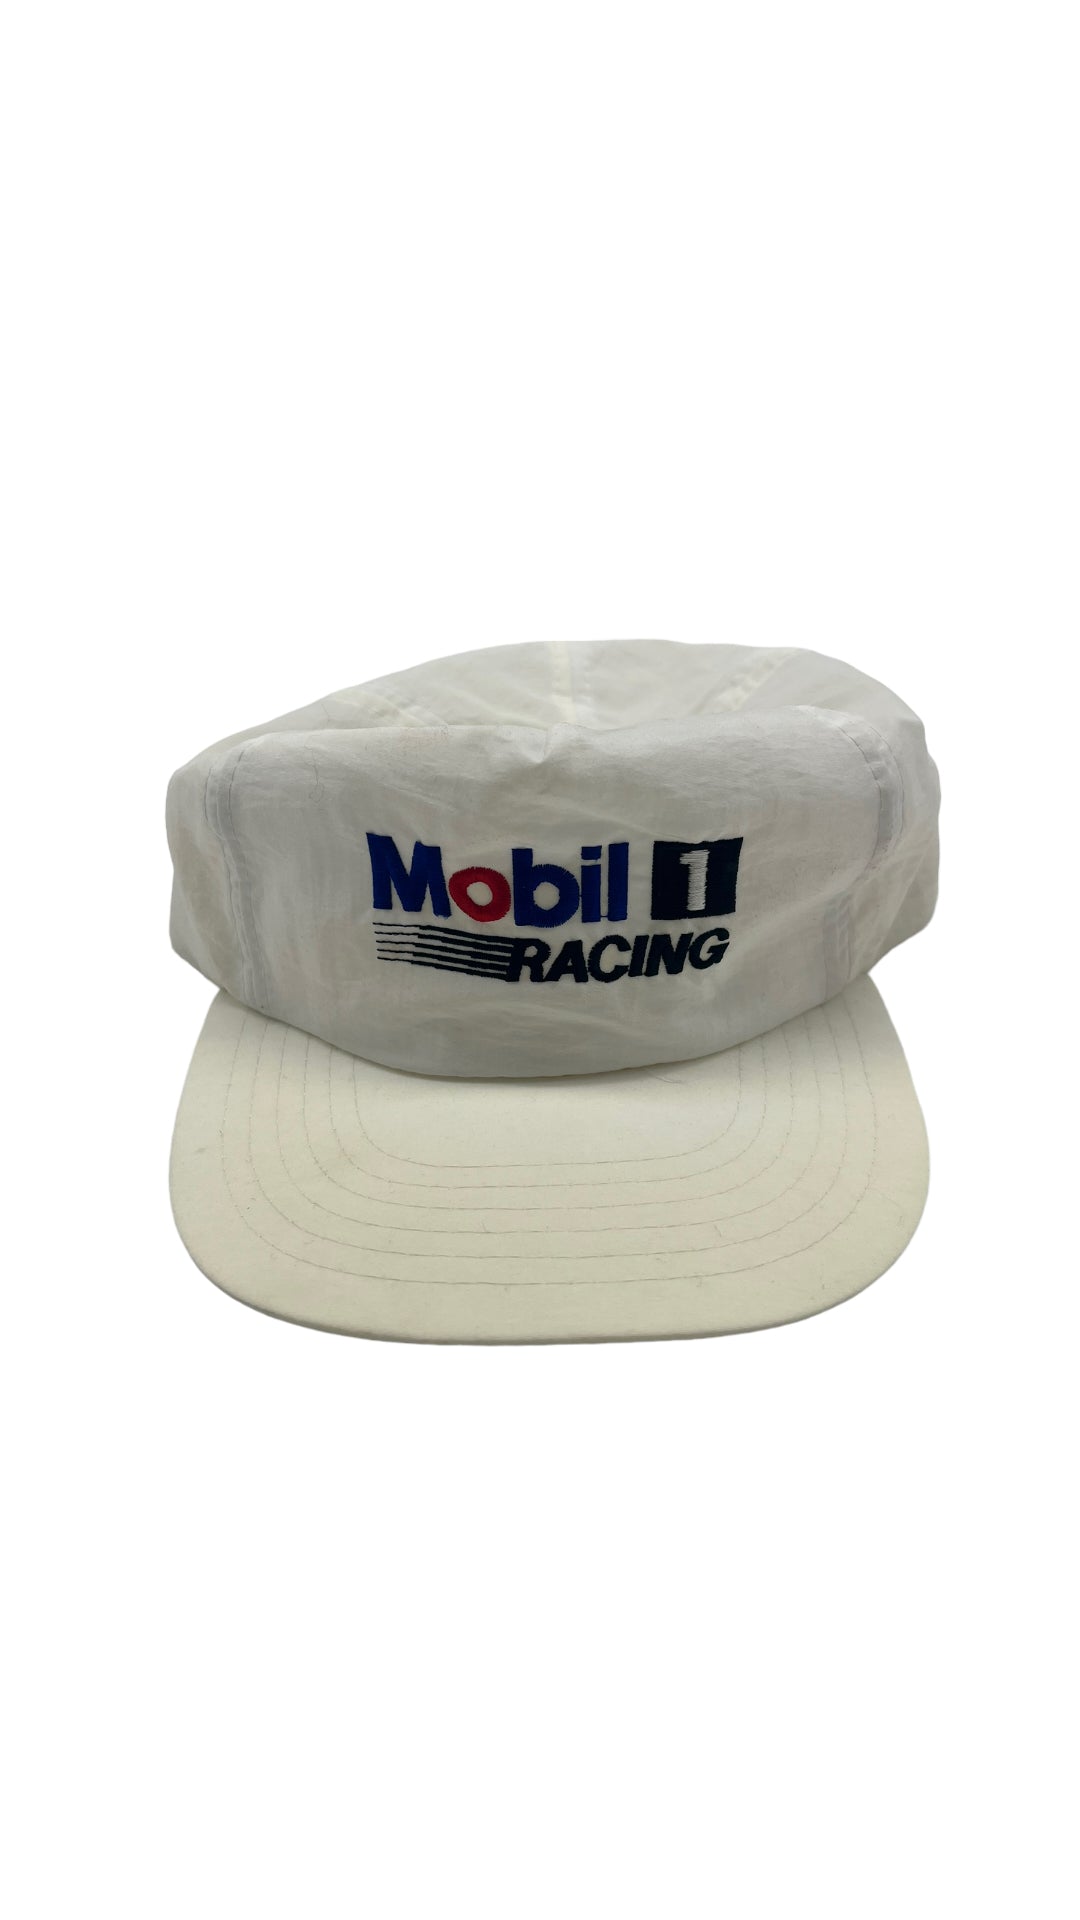 Vtg Mobil 1 Nylon Racing Hat